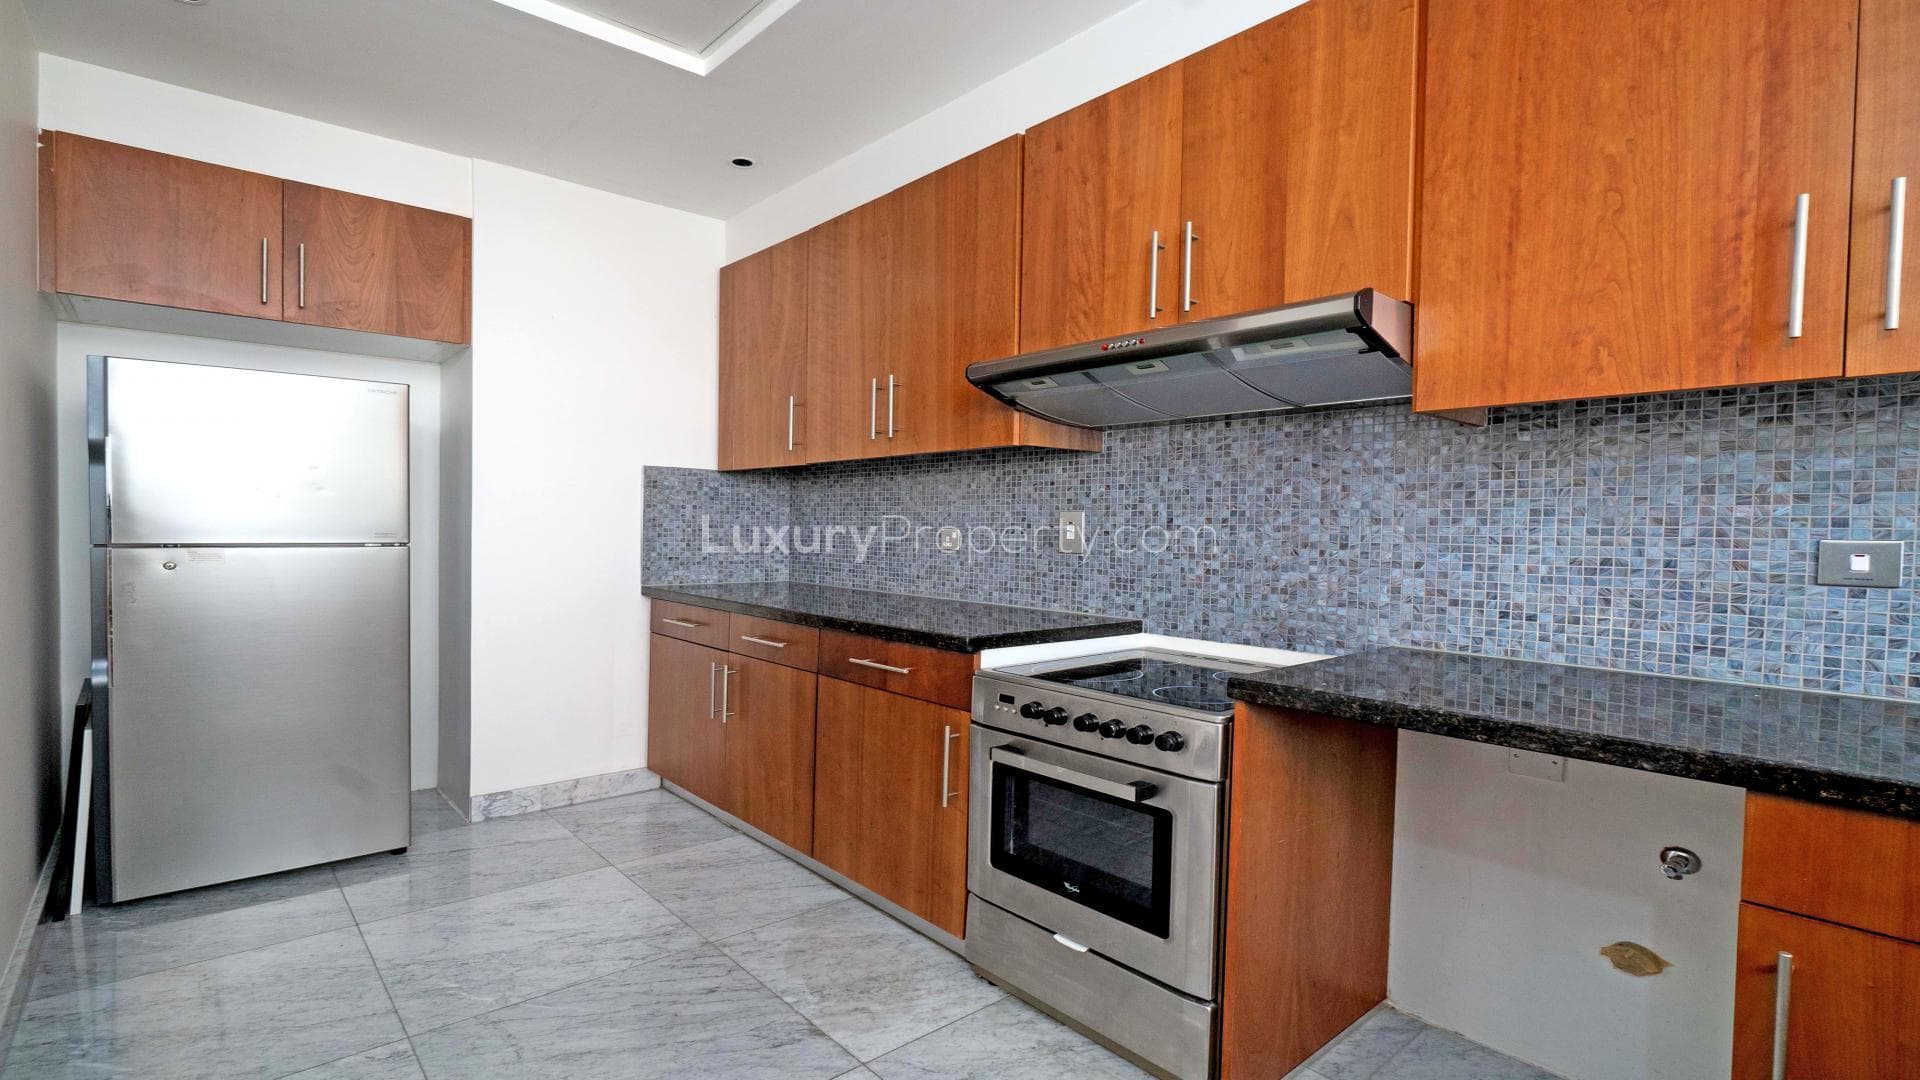 2 Bedroom Apartment For Rent Central Park Tower Lp36083 31cca8daf11e1800.jpg